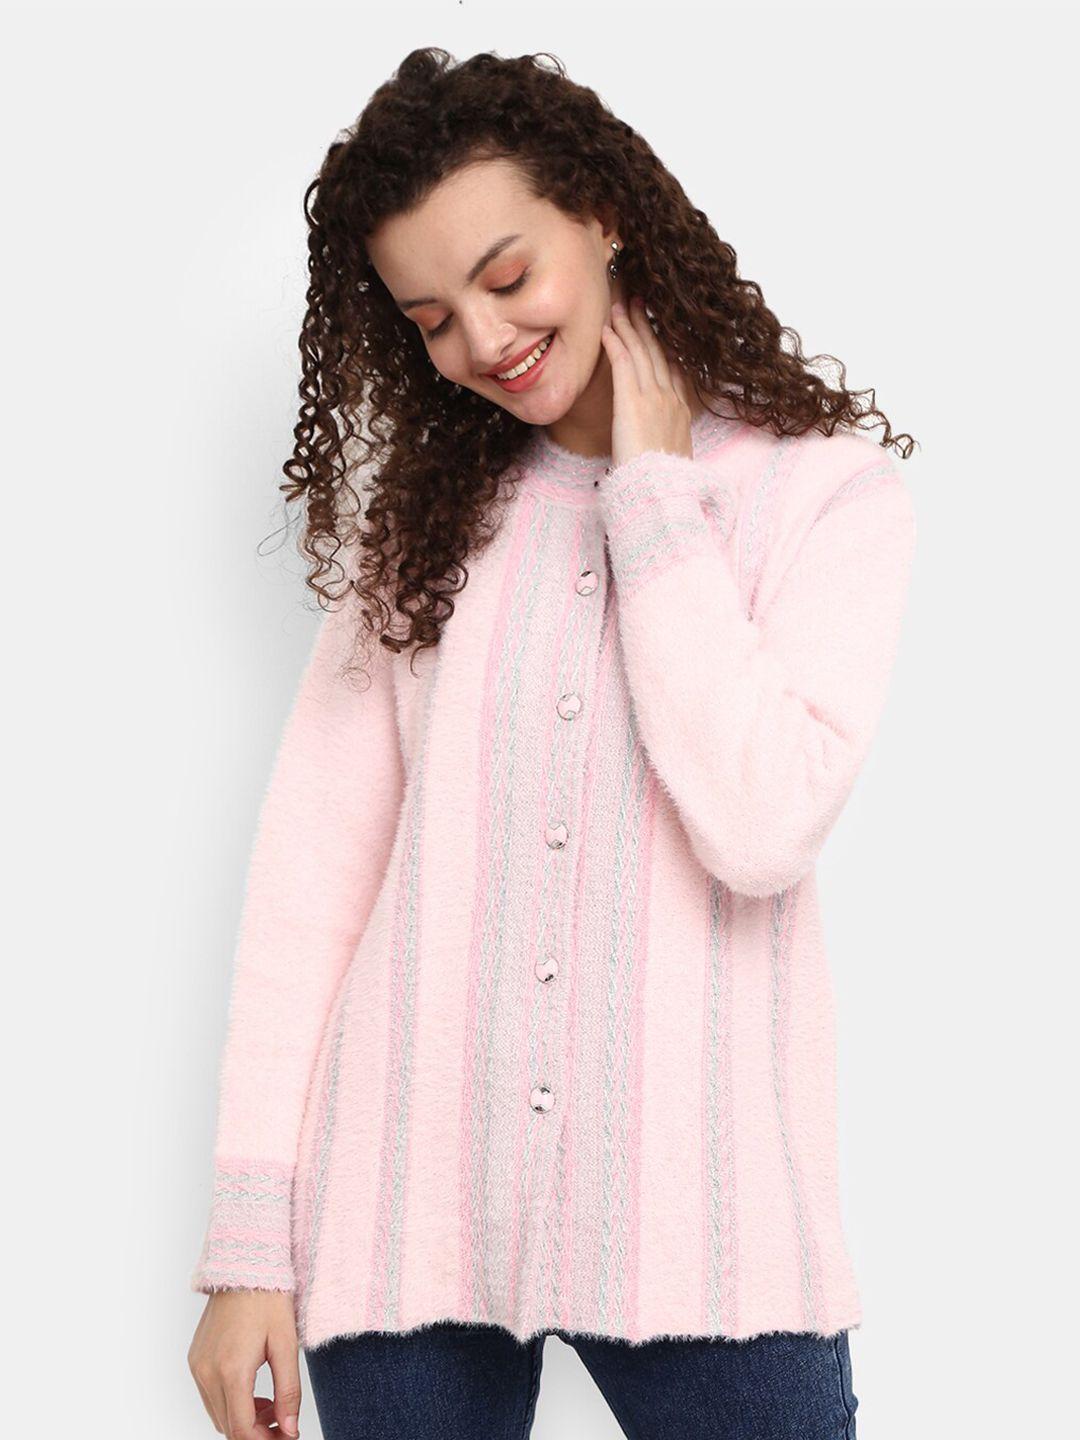 v-mart women pink round neck acrylic cardigan sweater